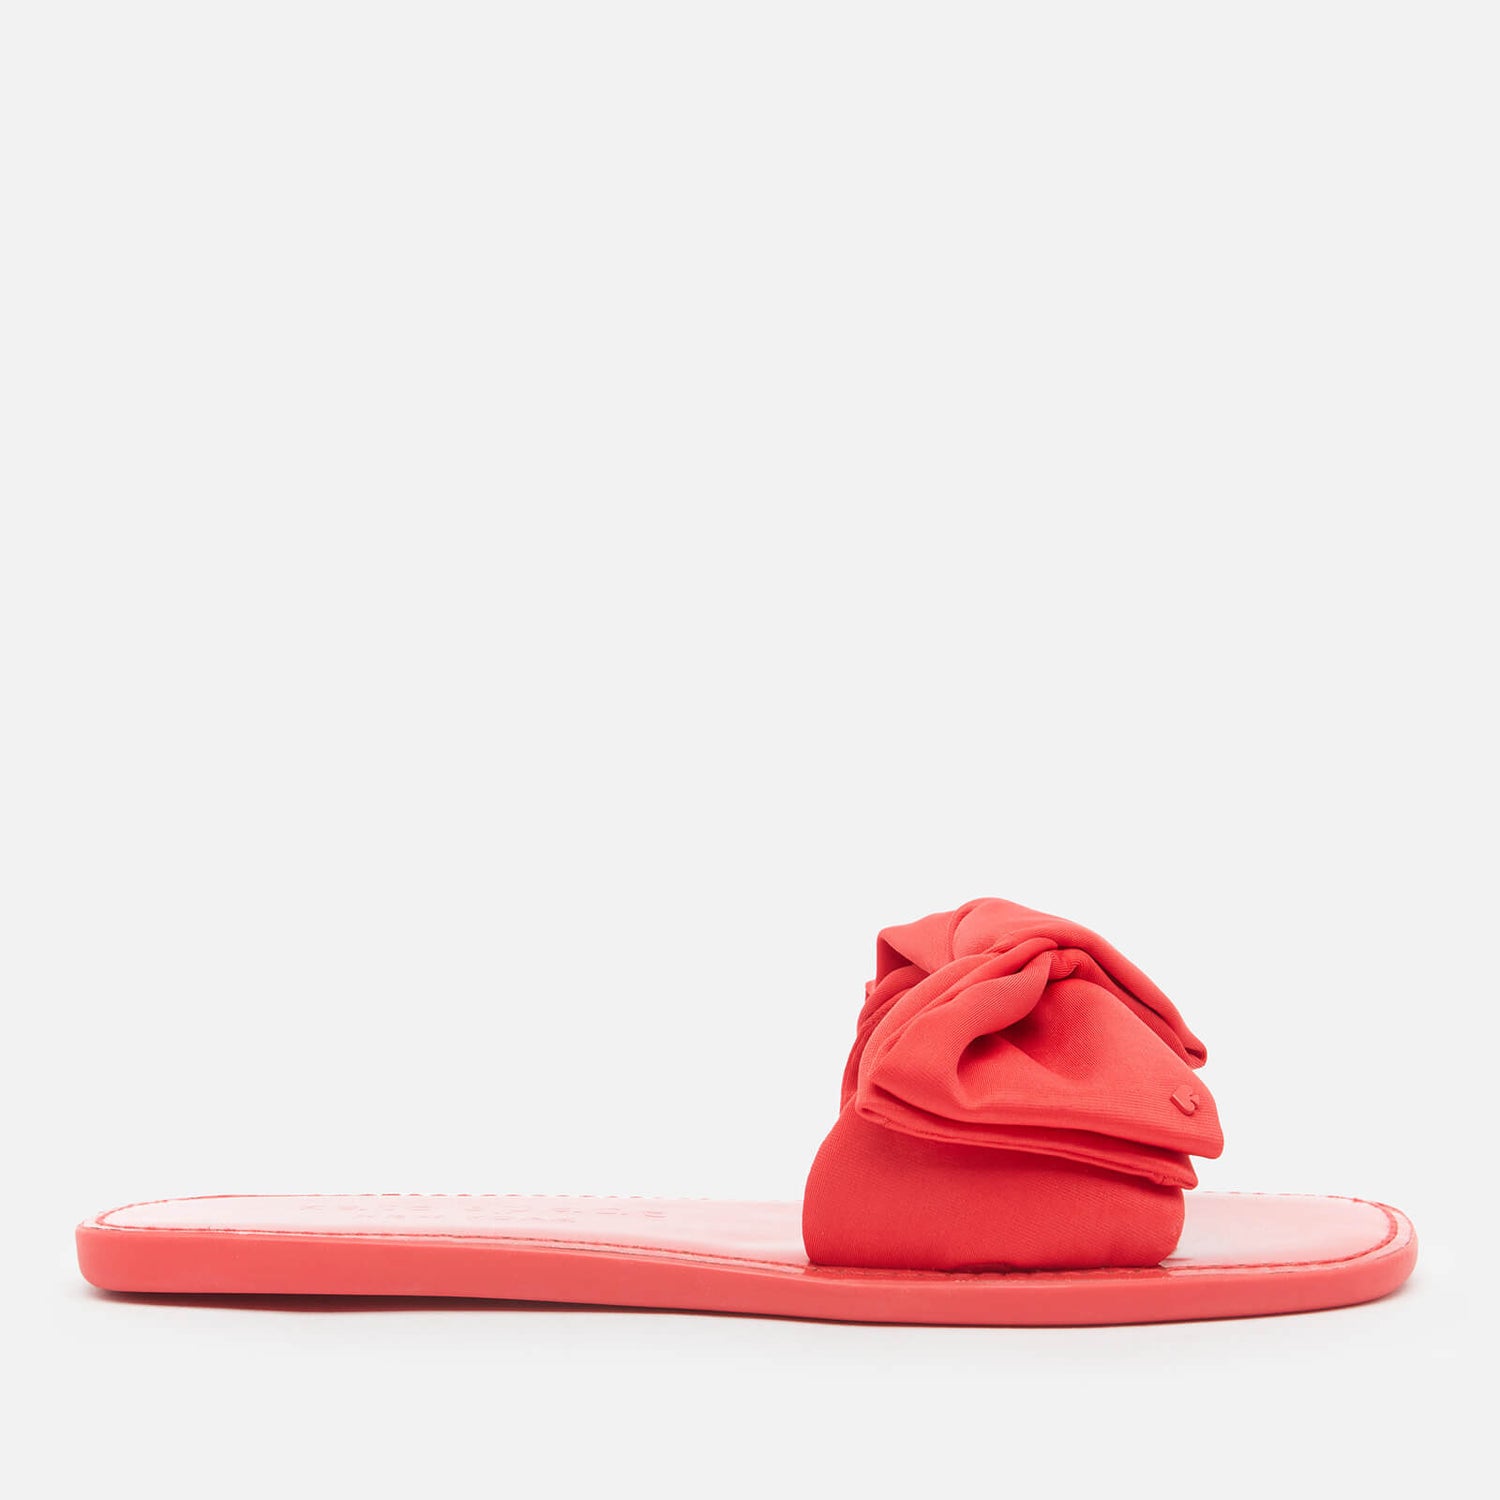 Kate Spade New York Women's Bikini Slide Sandals - Coral Rose